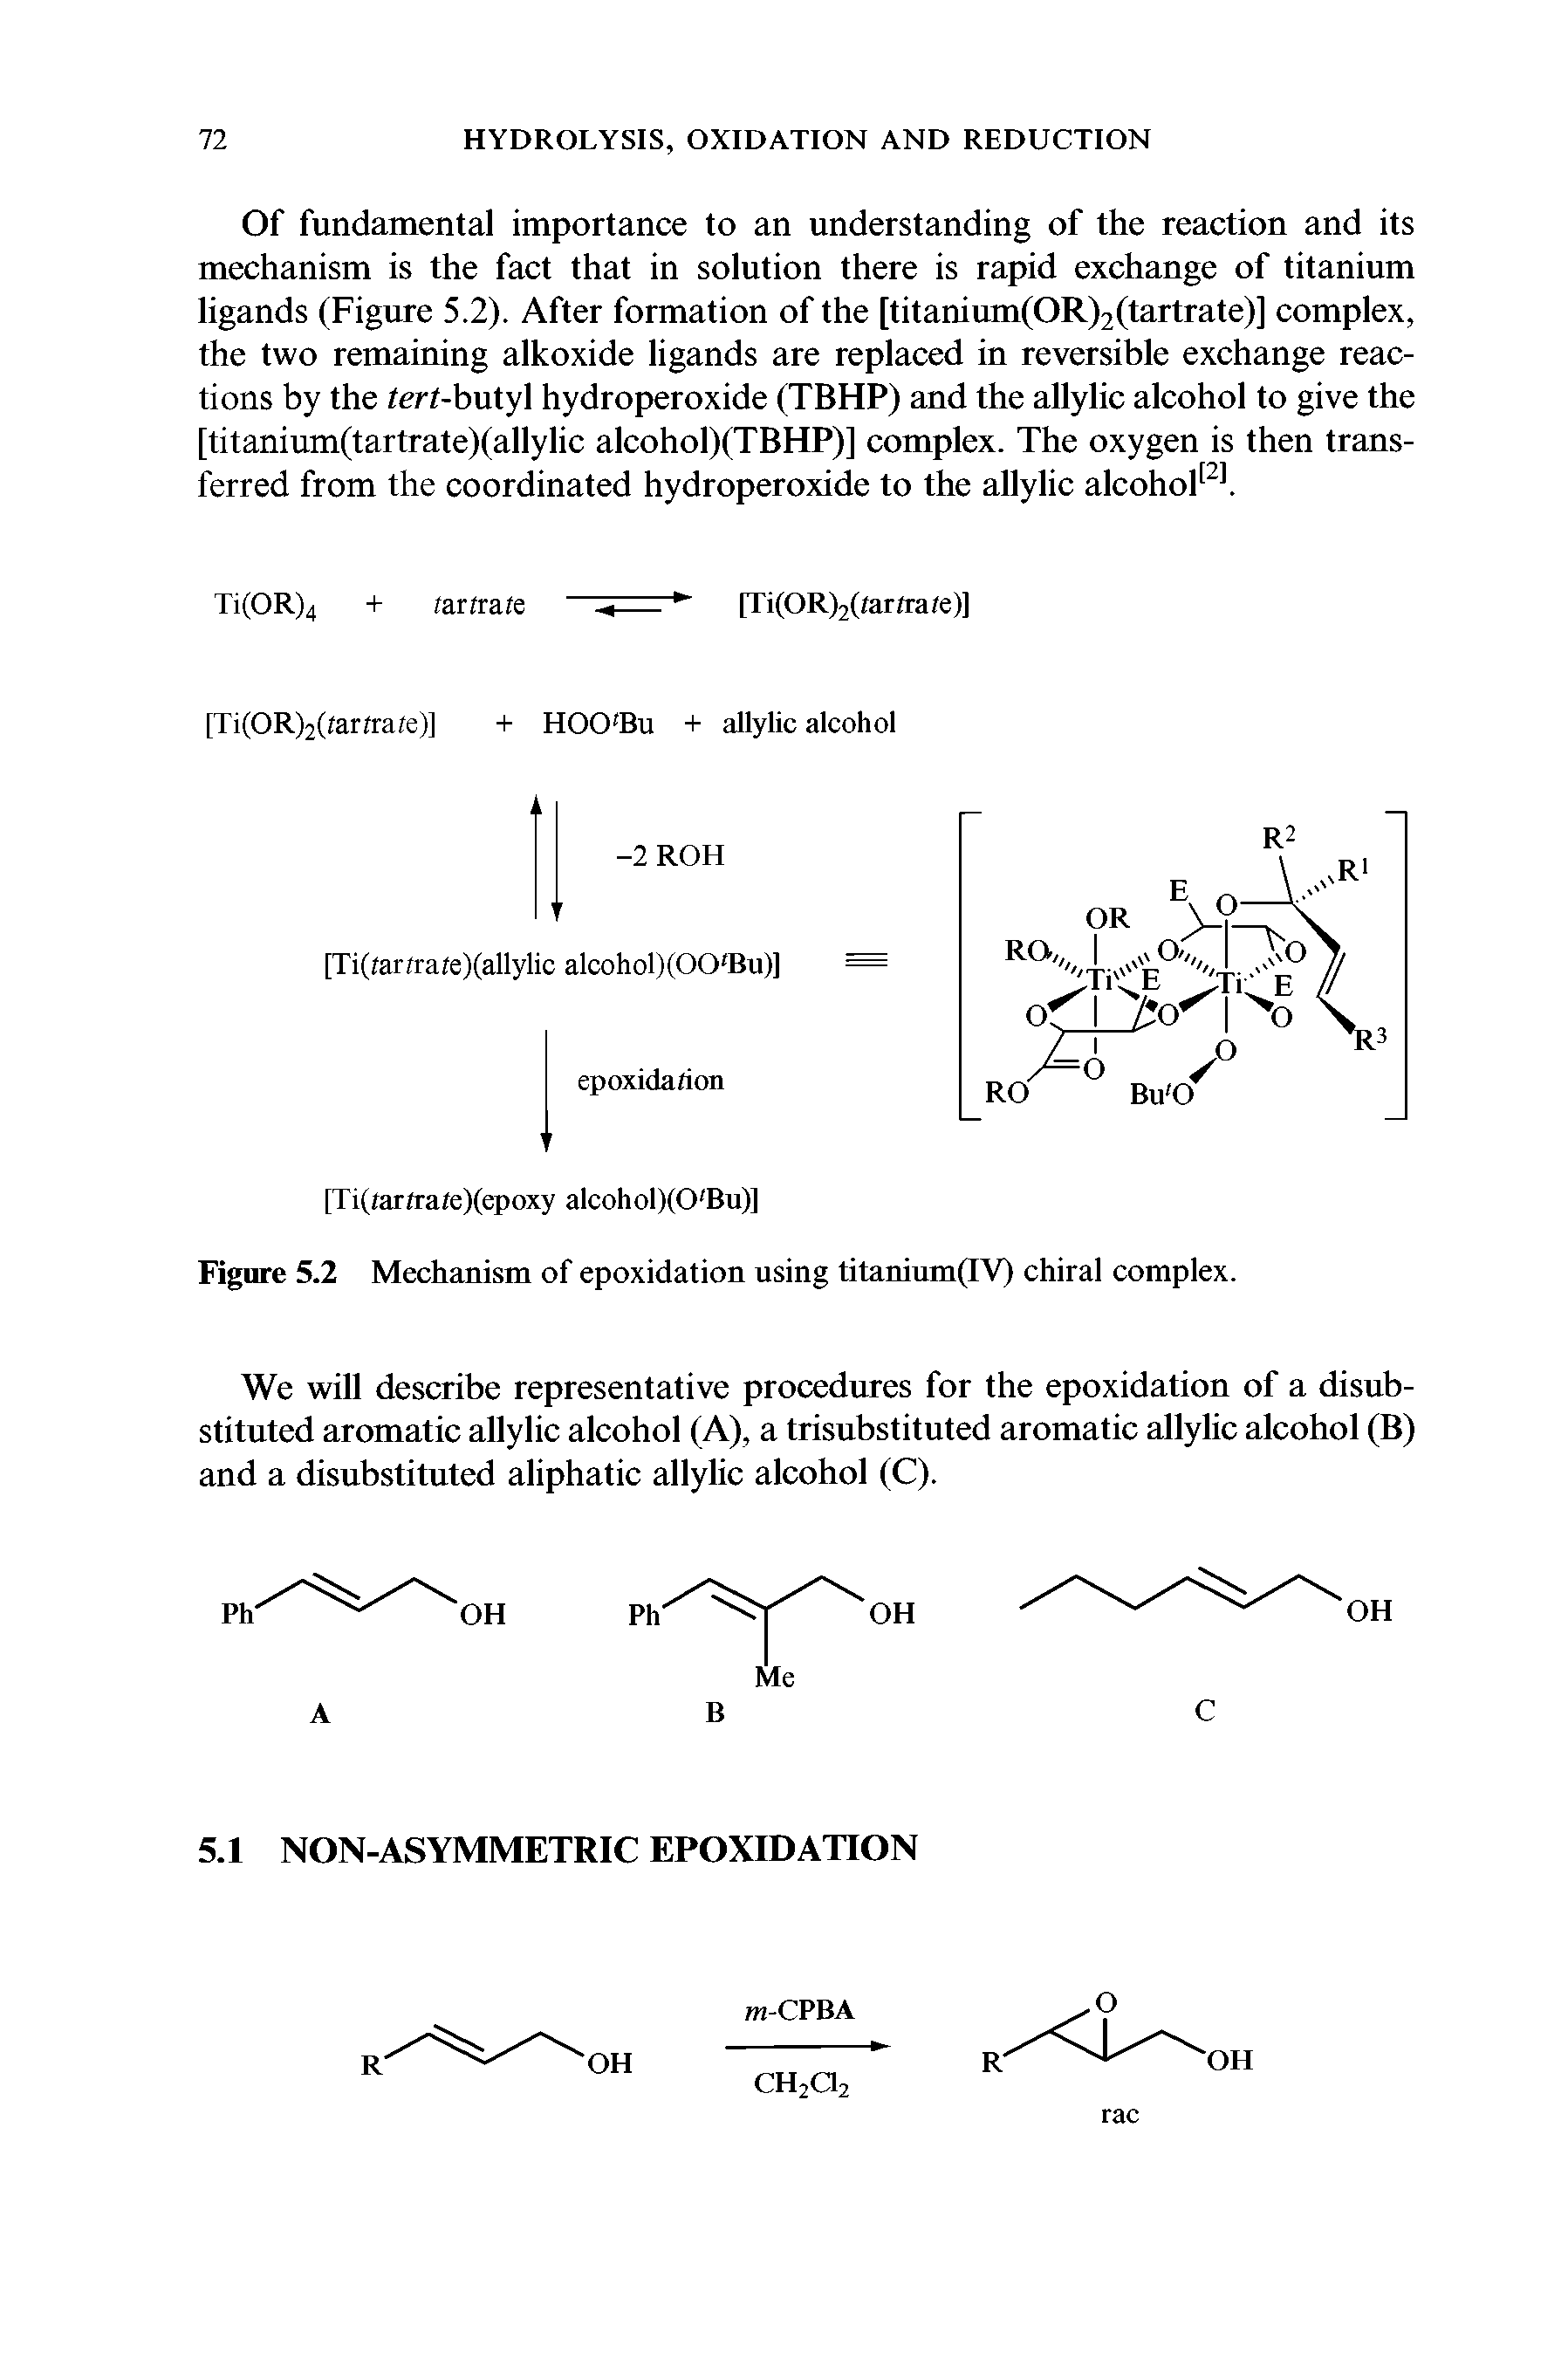 Figure 5.2 Mechanism of epoxidation using titanium(TV) chiral complex.